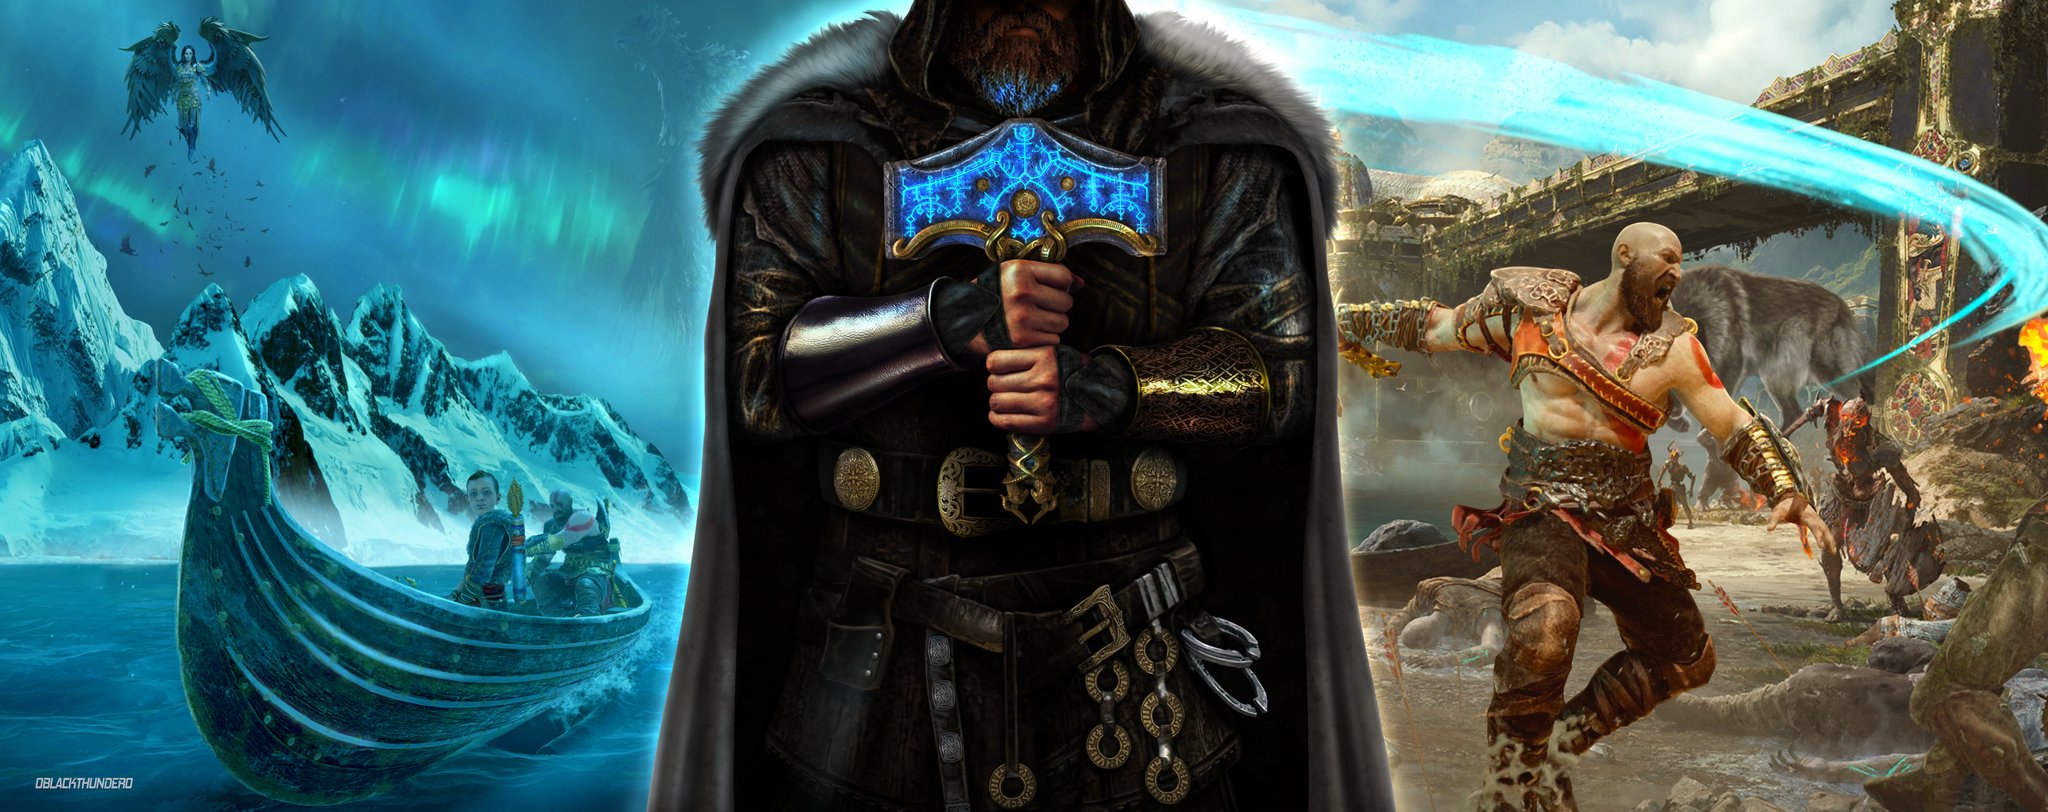 Black Thunder ⚡️ on X: God of War Ragnarök - We must prepare ourselves ❄️  #GodofWarRagnarok #GodofWar #PS5  / X